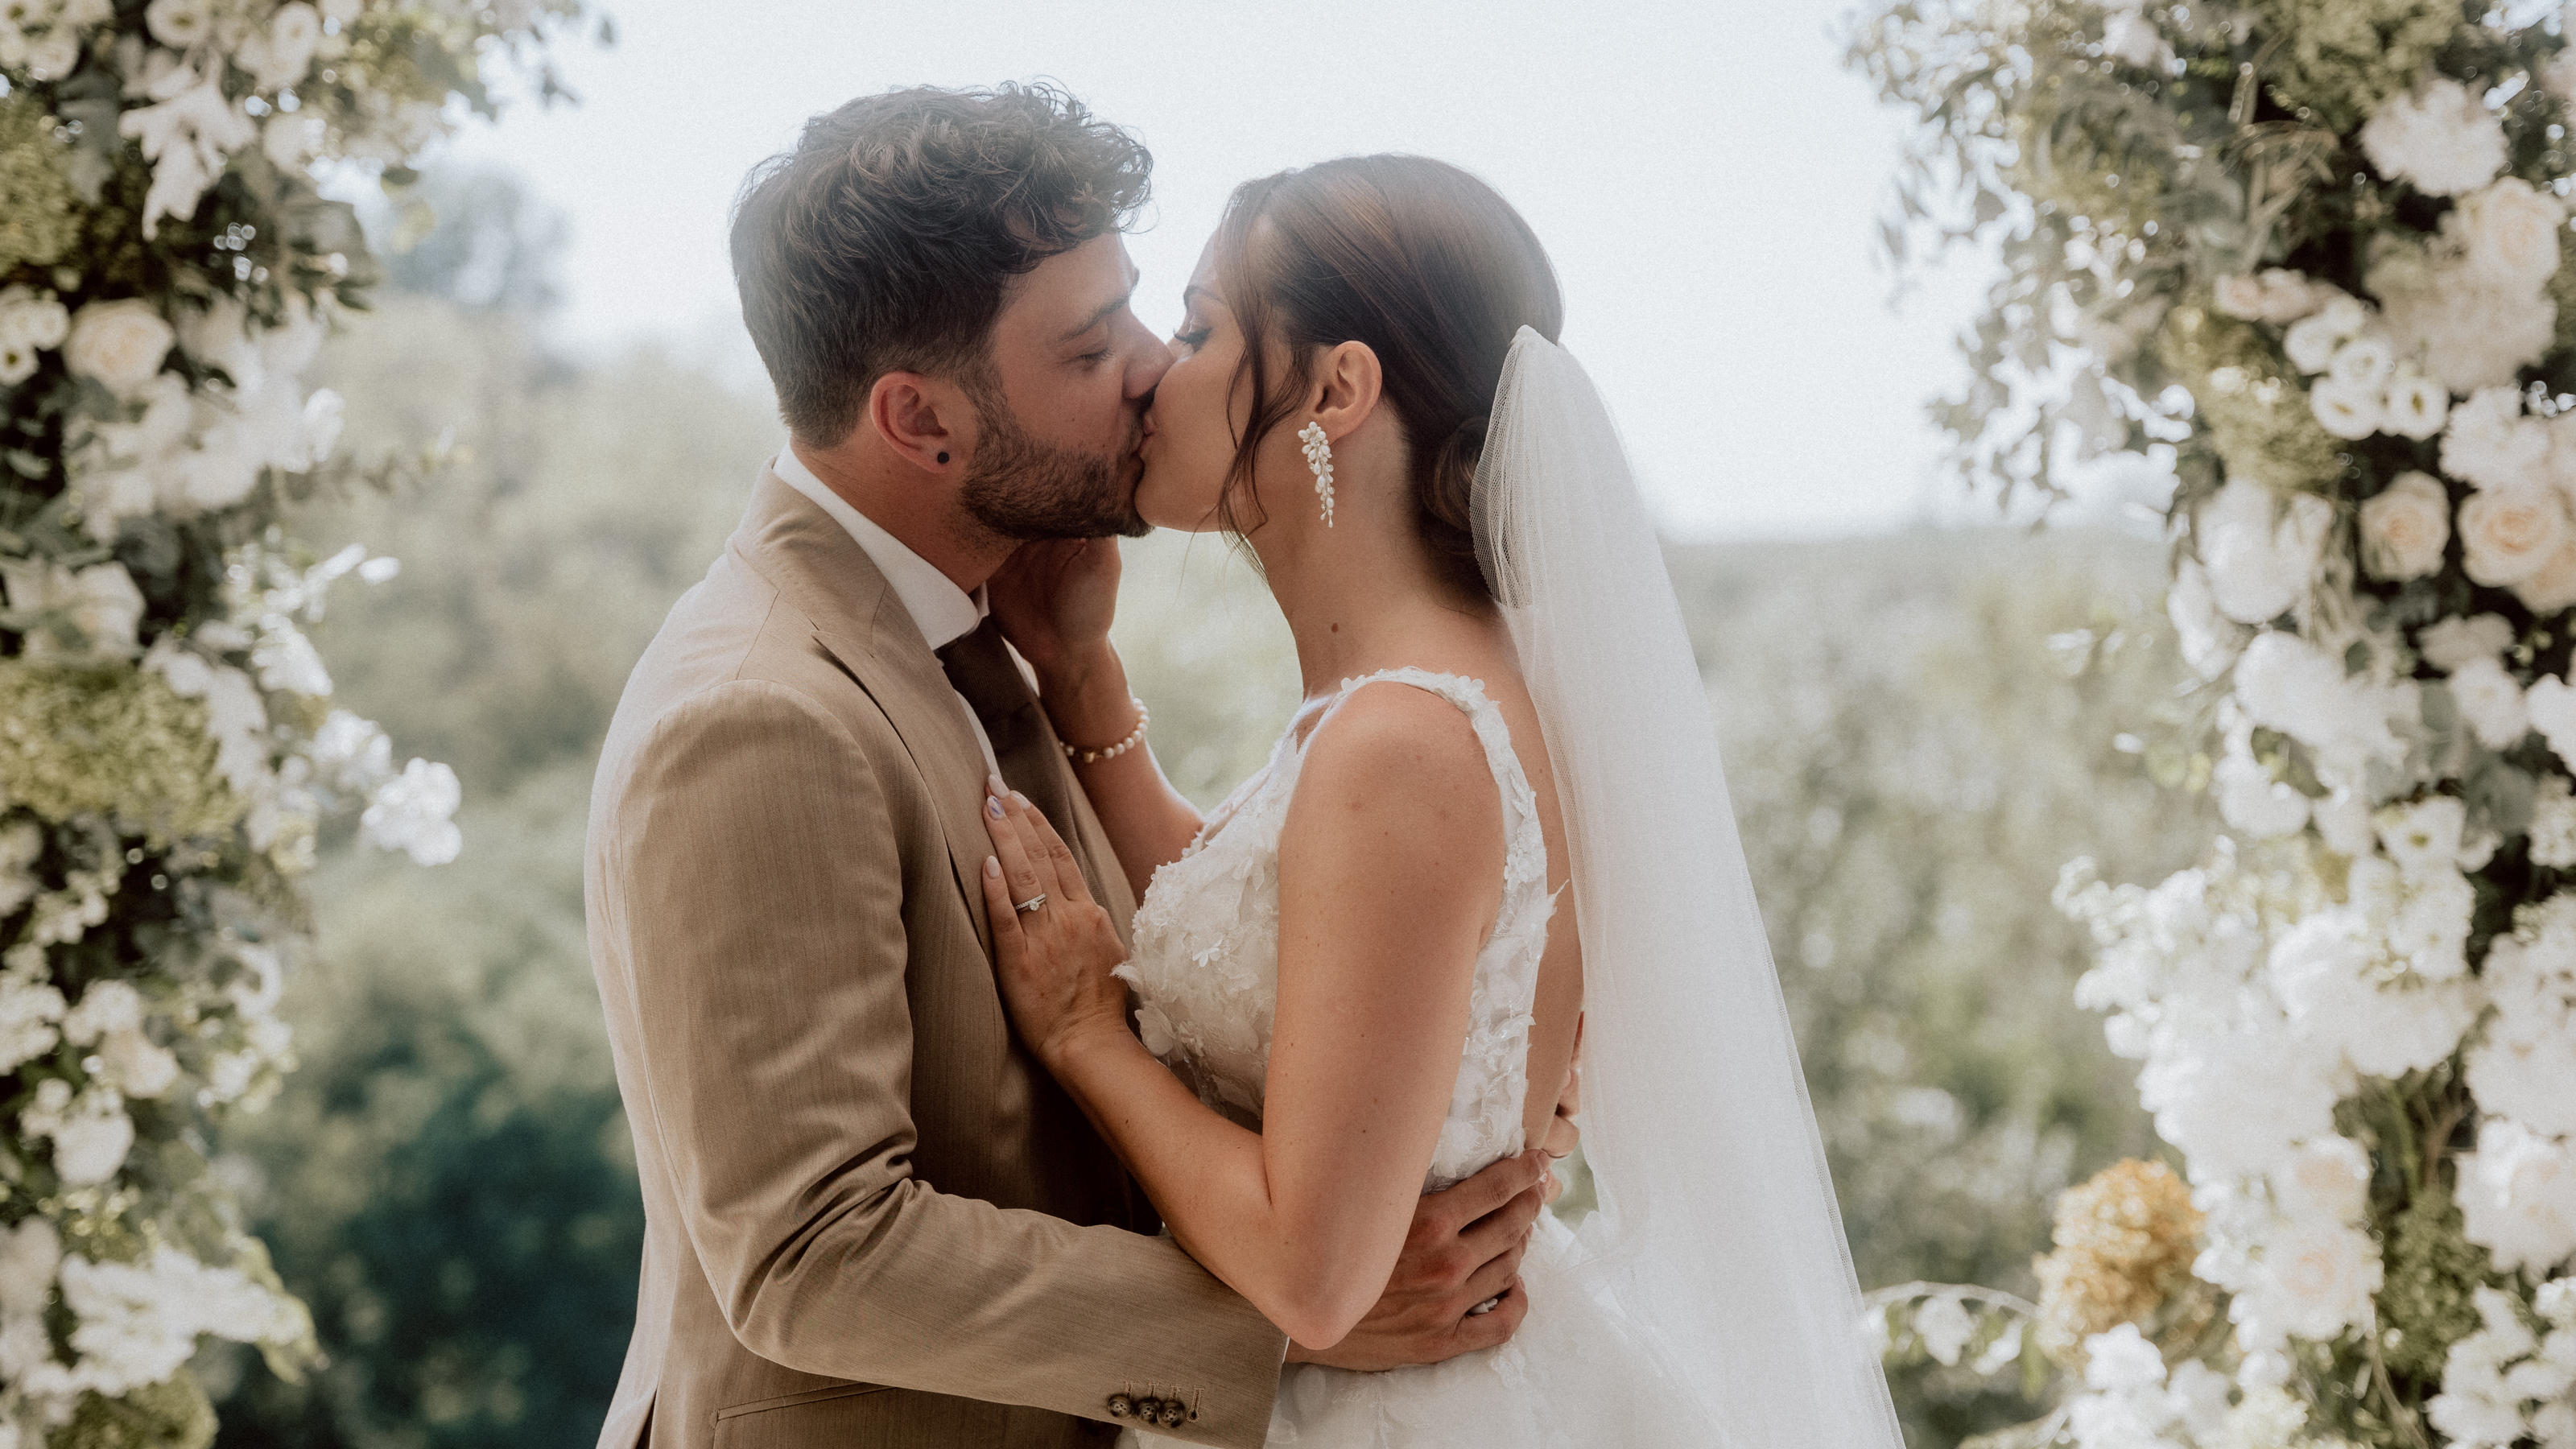 Luca Hani and Christina Loft agreed to their themed wedding 